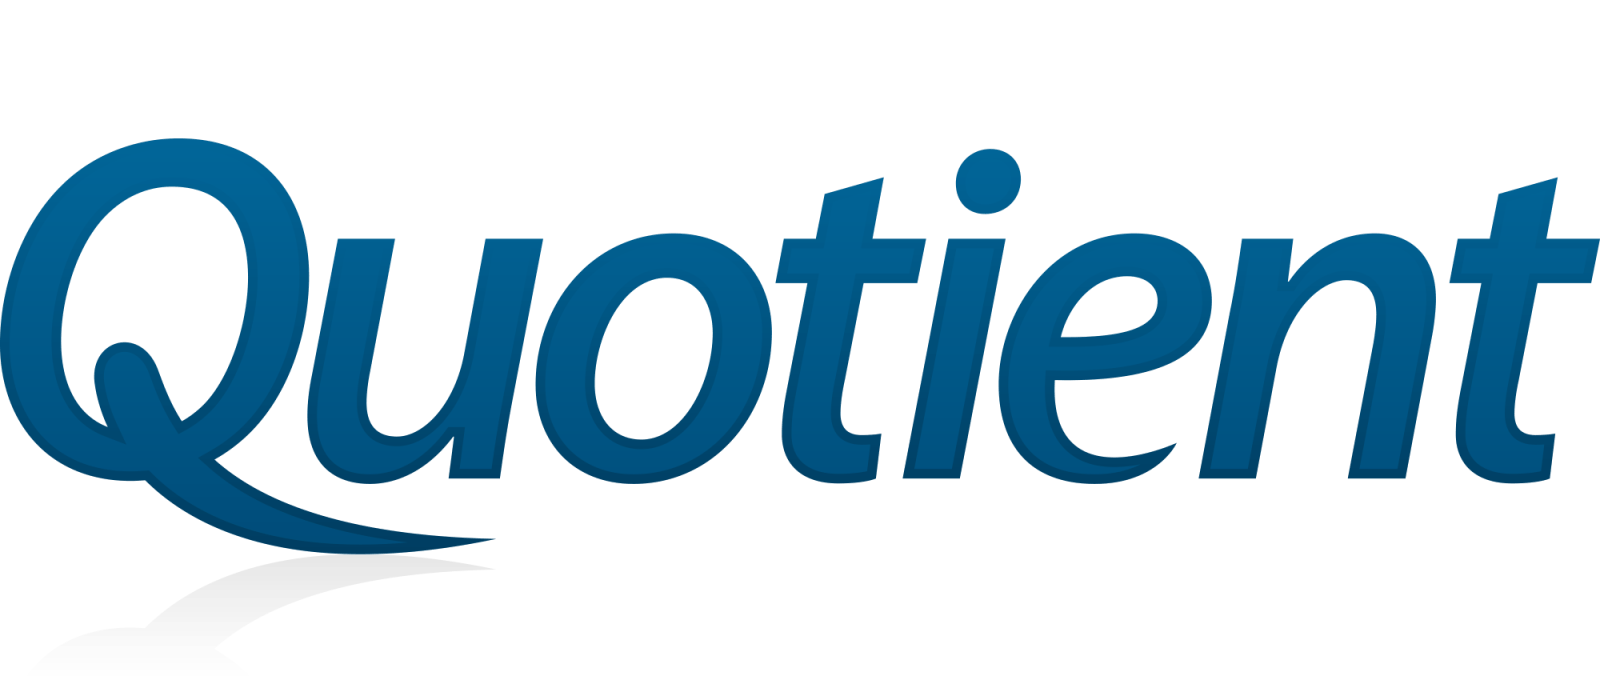 Quotient Logo - Ecosystem partner of the month: Quotient